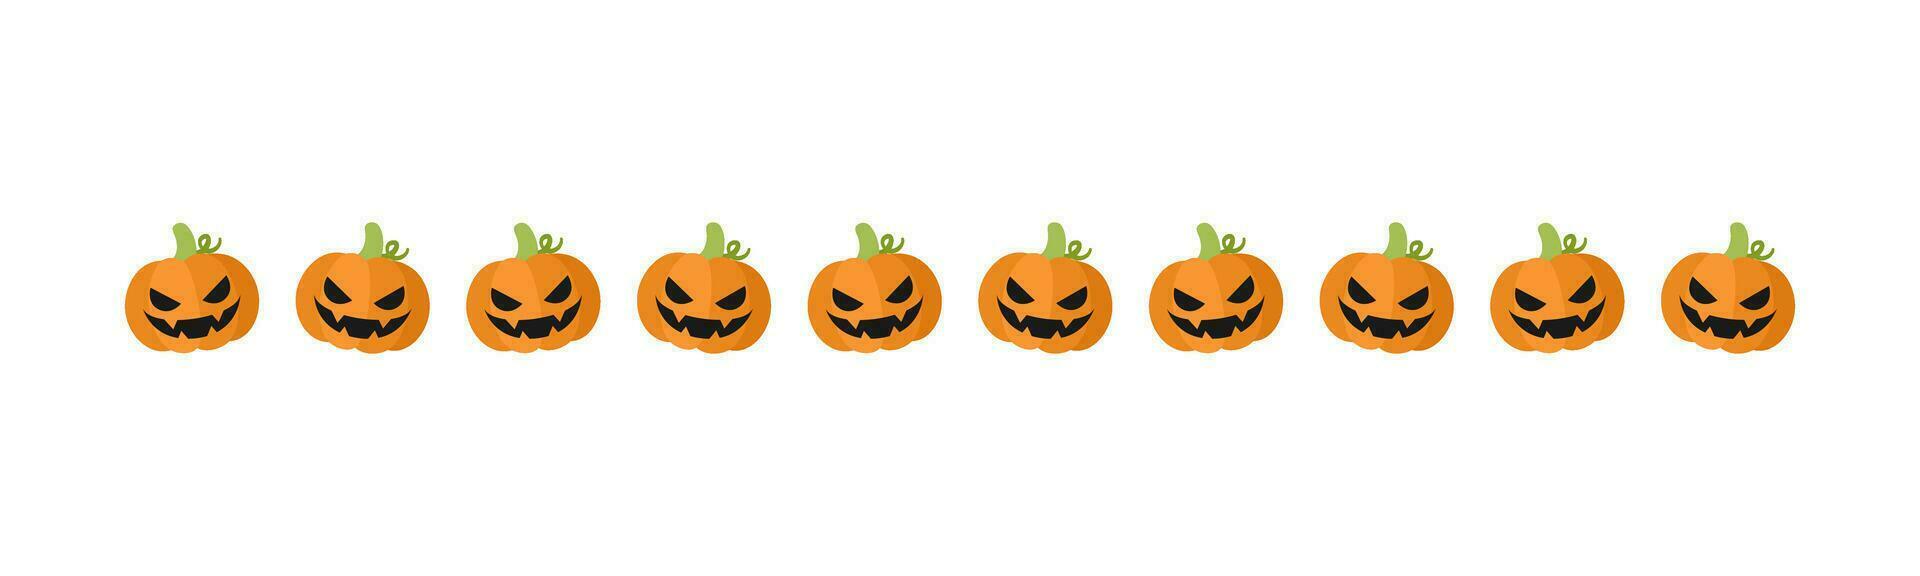 Separator Border illustration line of cute jack o lanterns, evil pumpkin, trick or treat pattern for Halloween day concept of autumn season vector